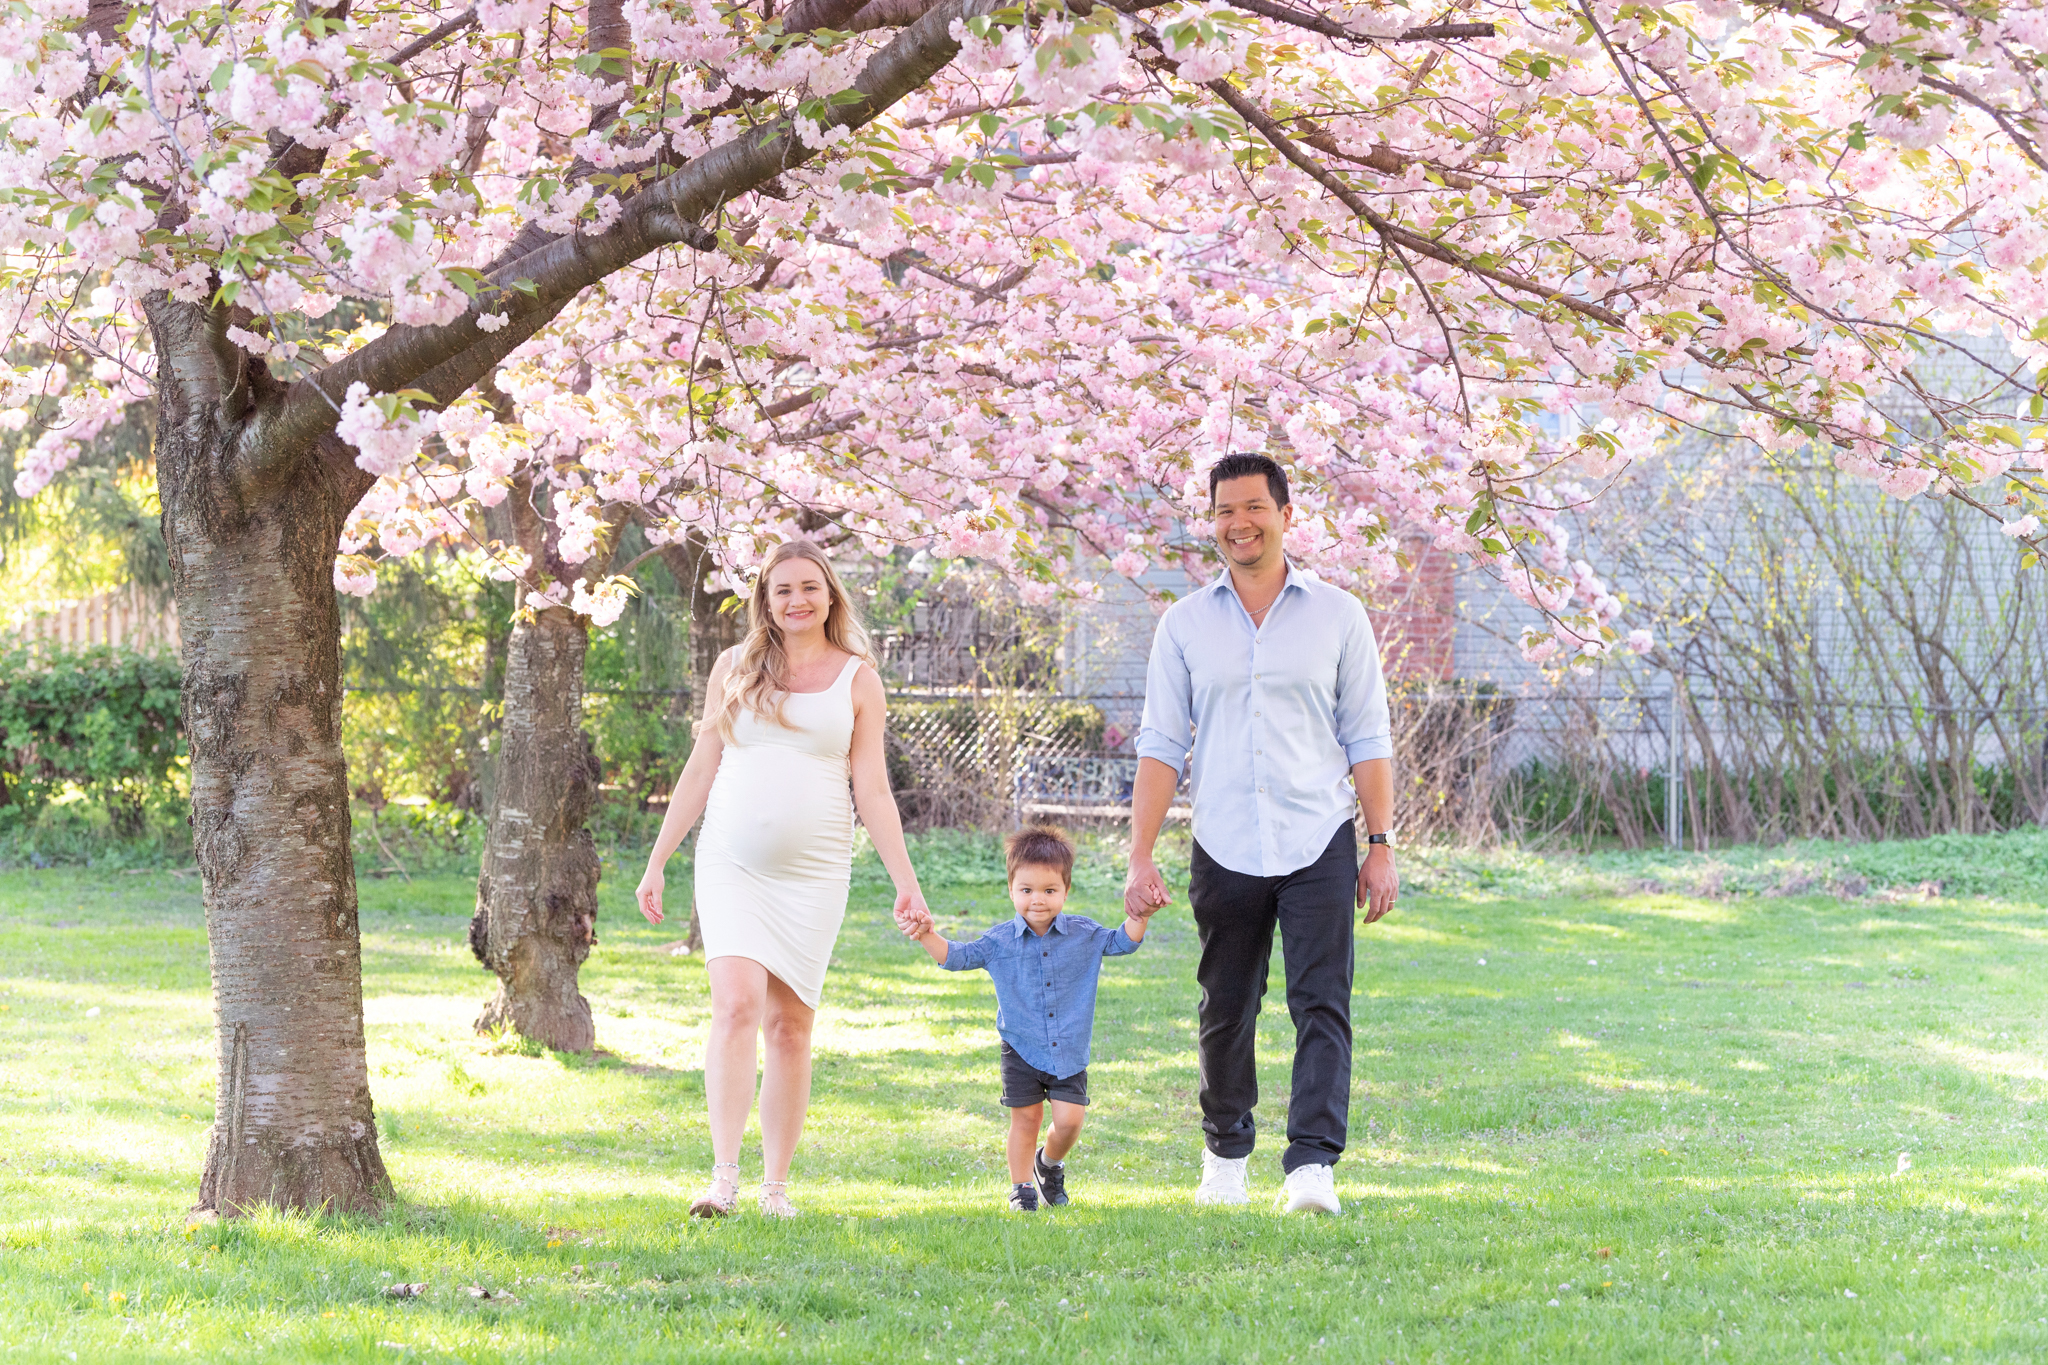 A family of three walking under the cherry blossom tree.